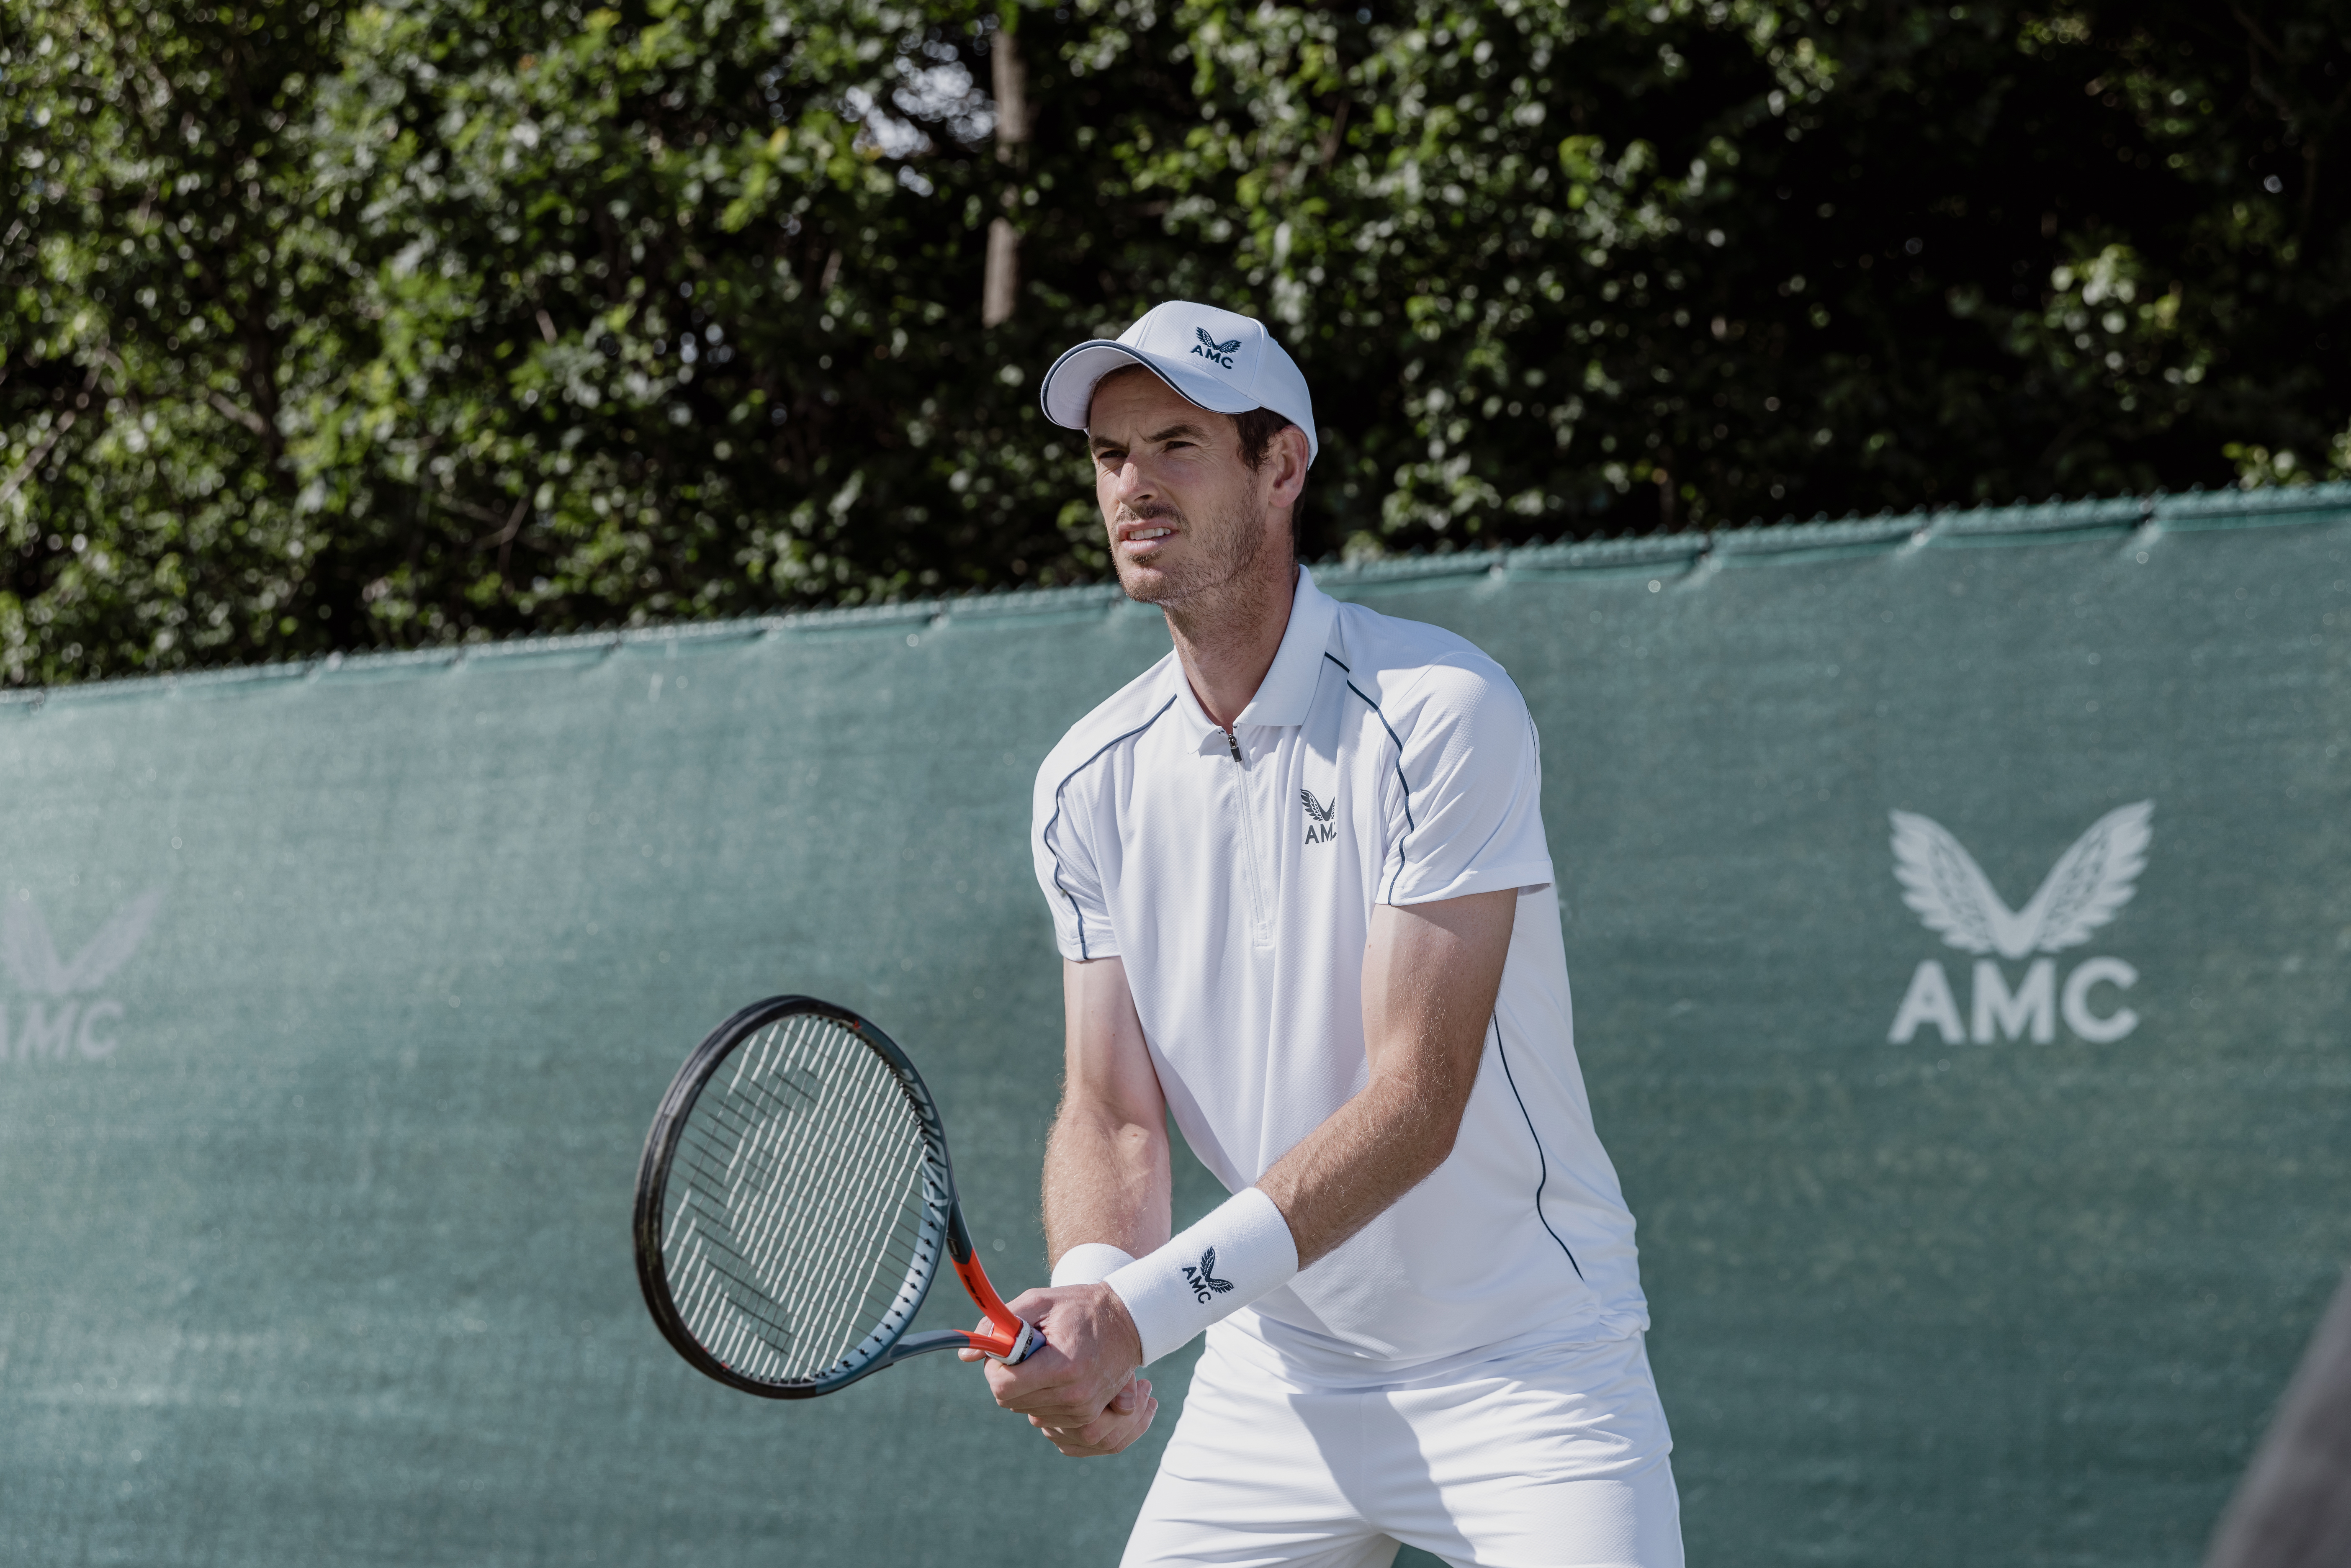 Andy Murray in his AMC Wimbledon kit 